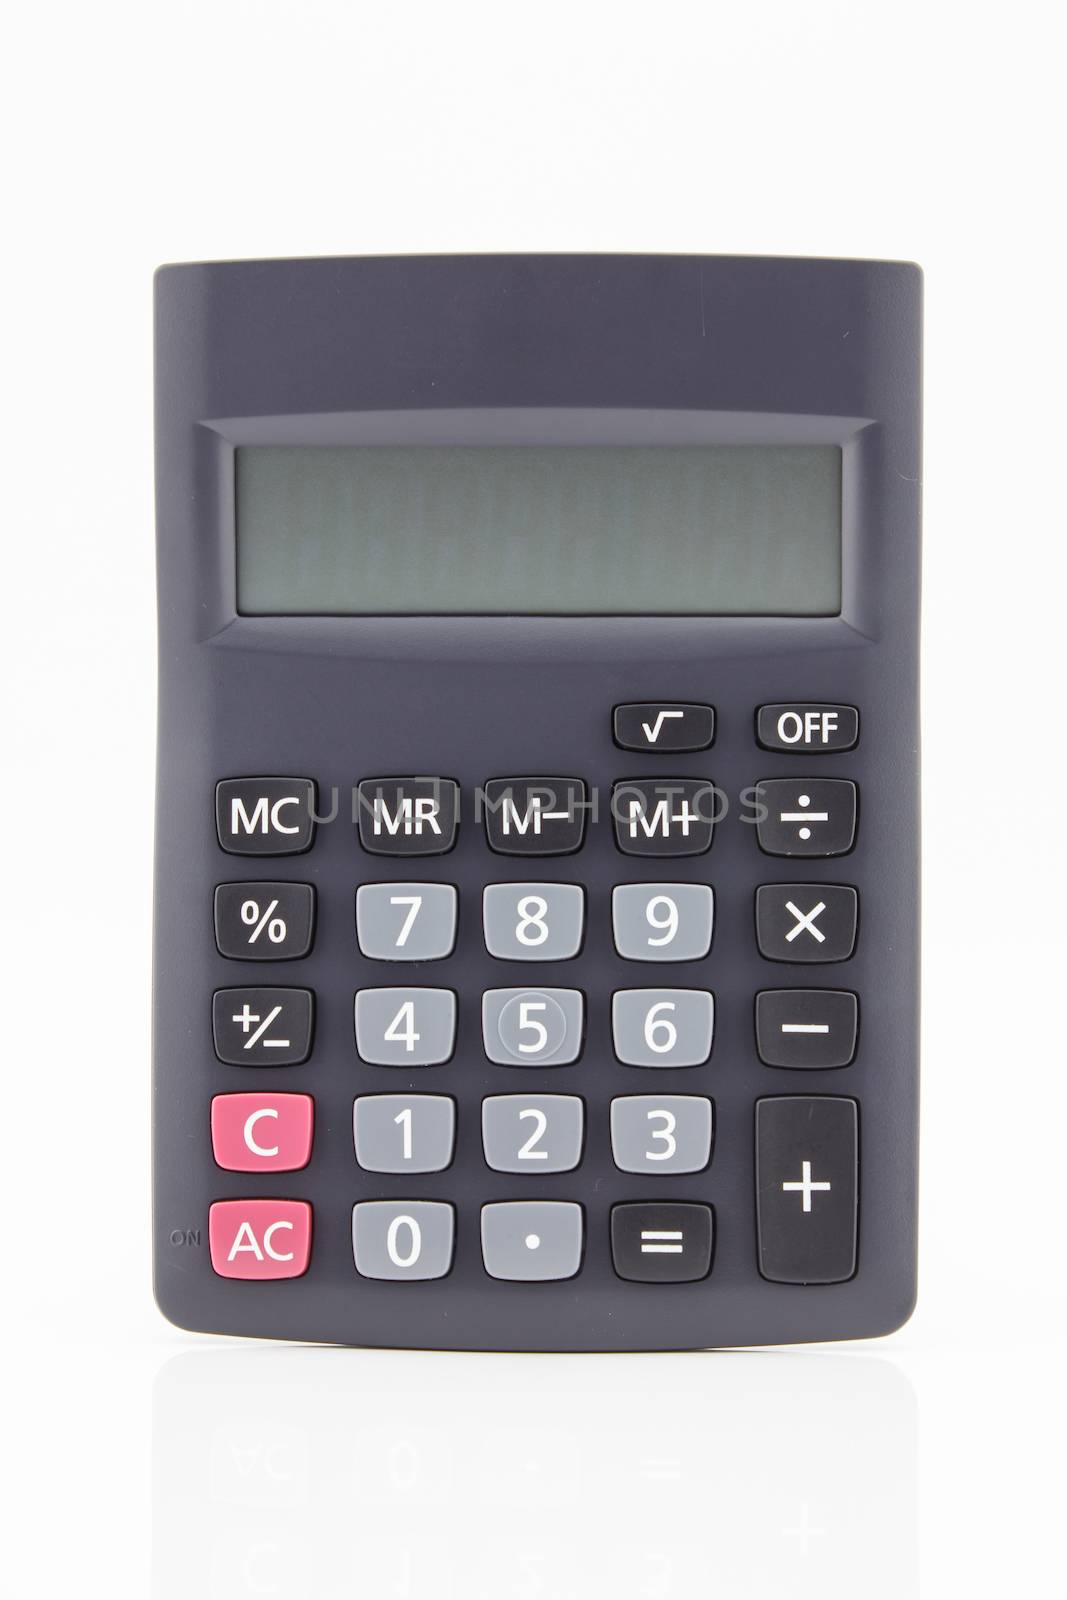 Black calculator isolated on white background